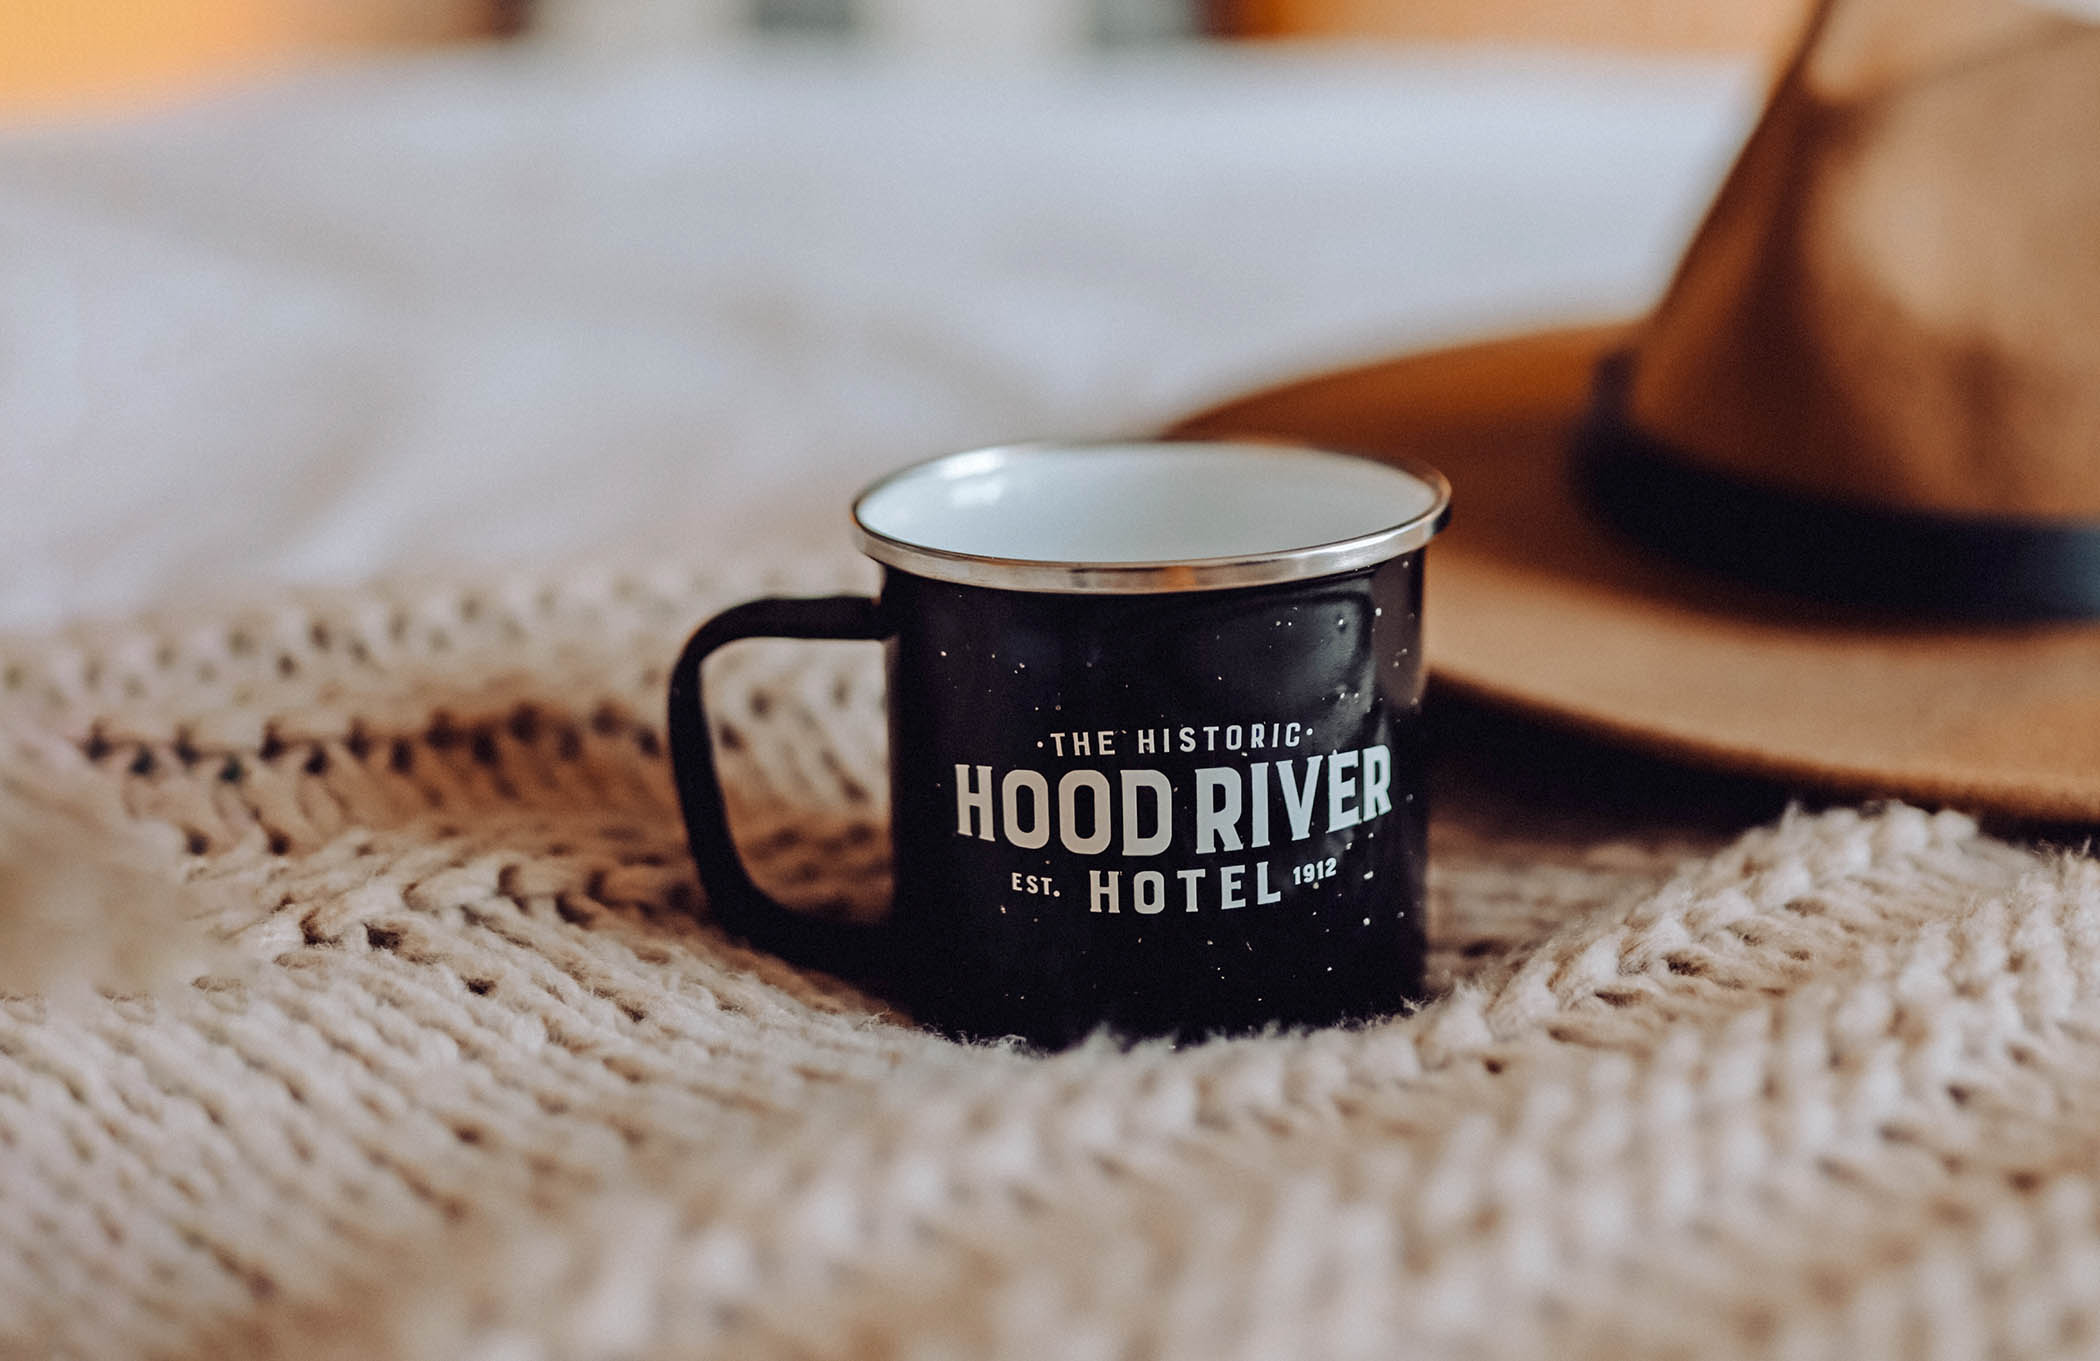 hood river hotel coffee mug